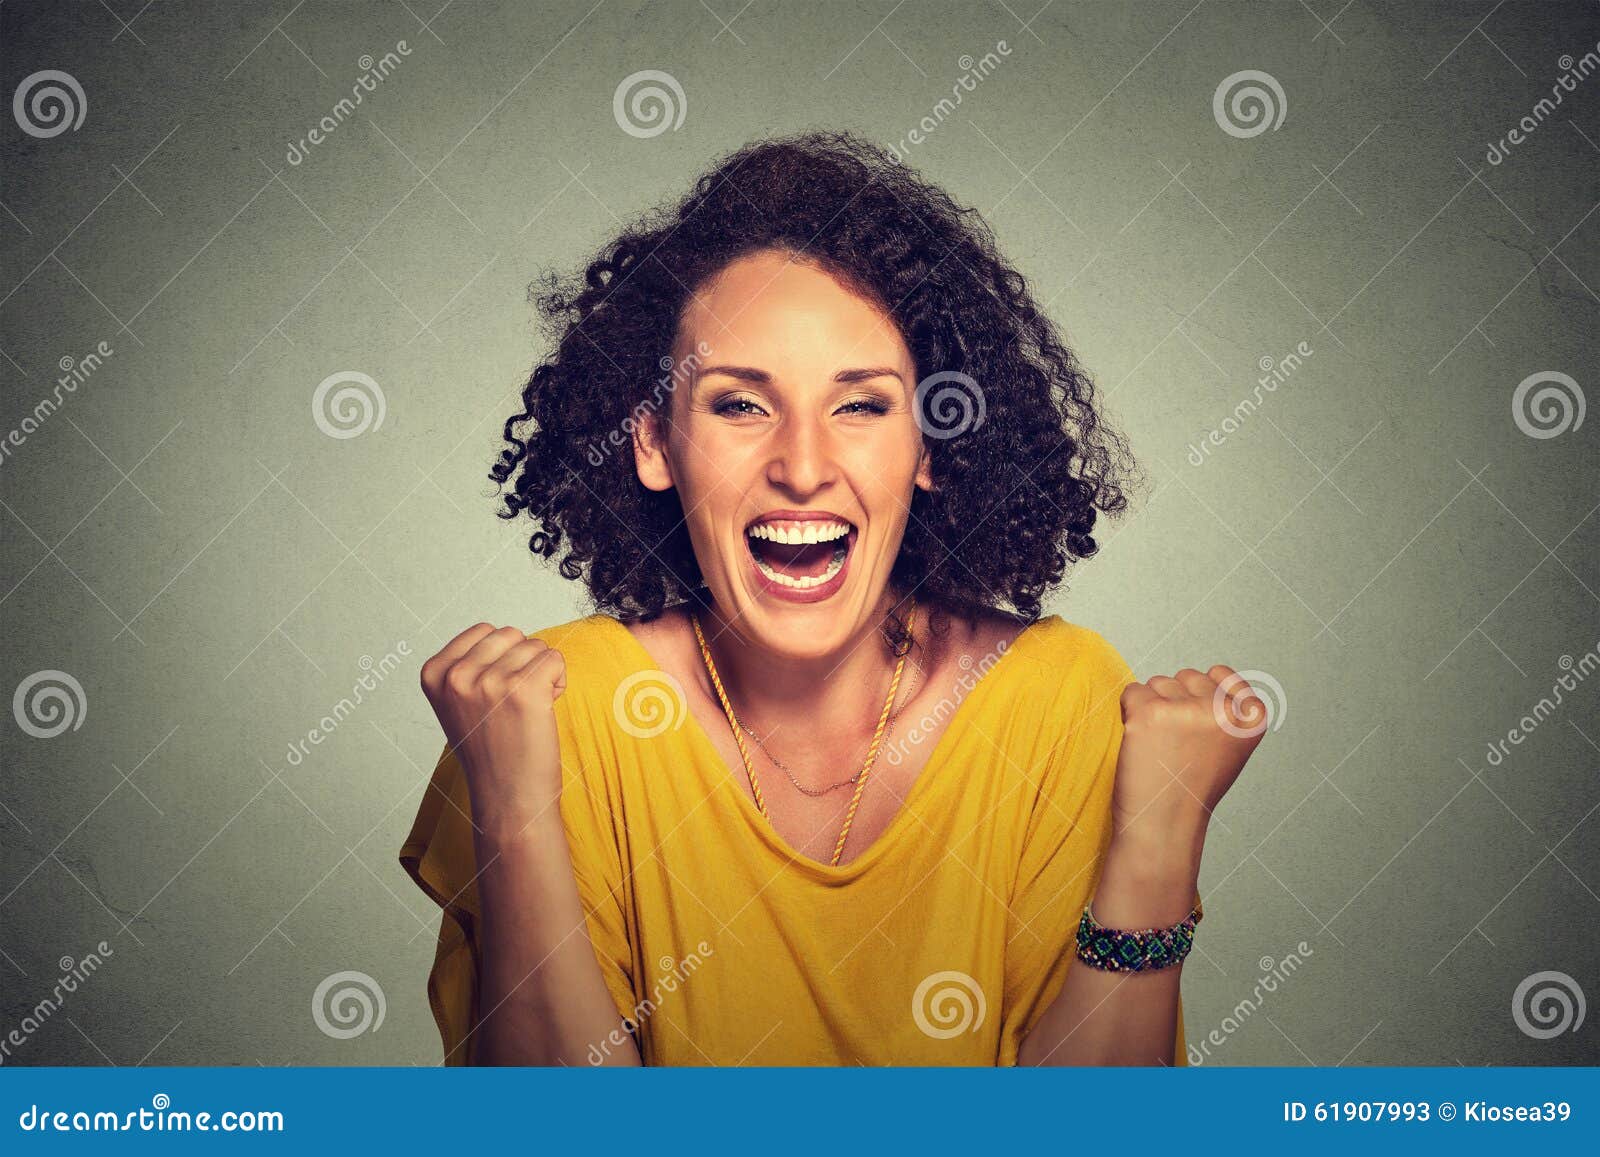 happy woman exults pumping fists ecstatic celebrates success